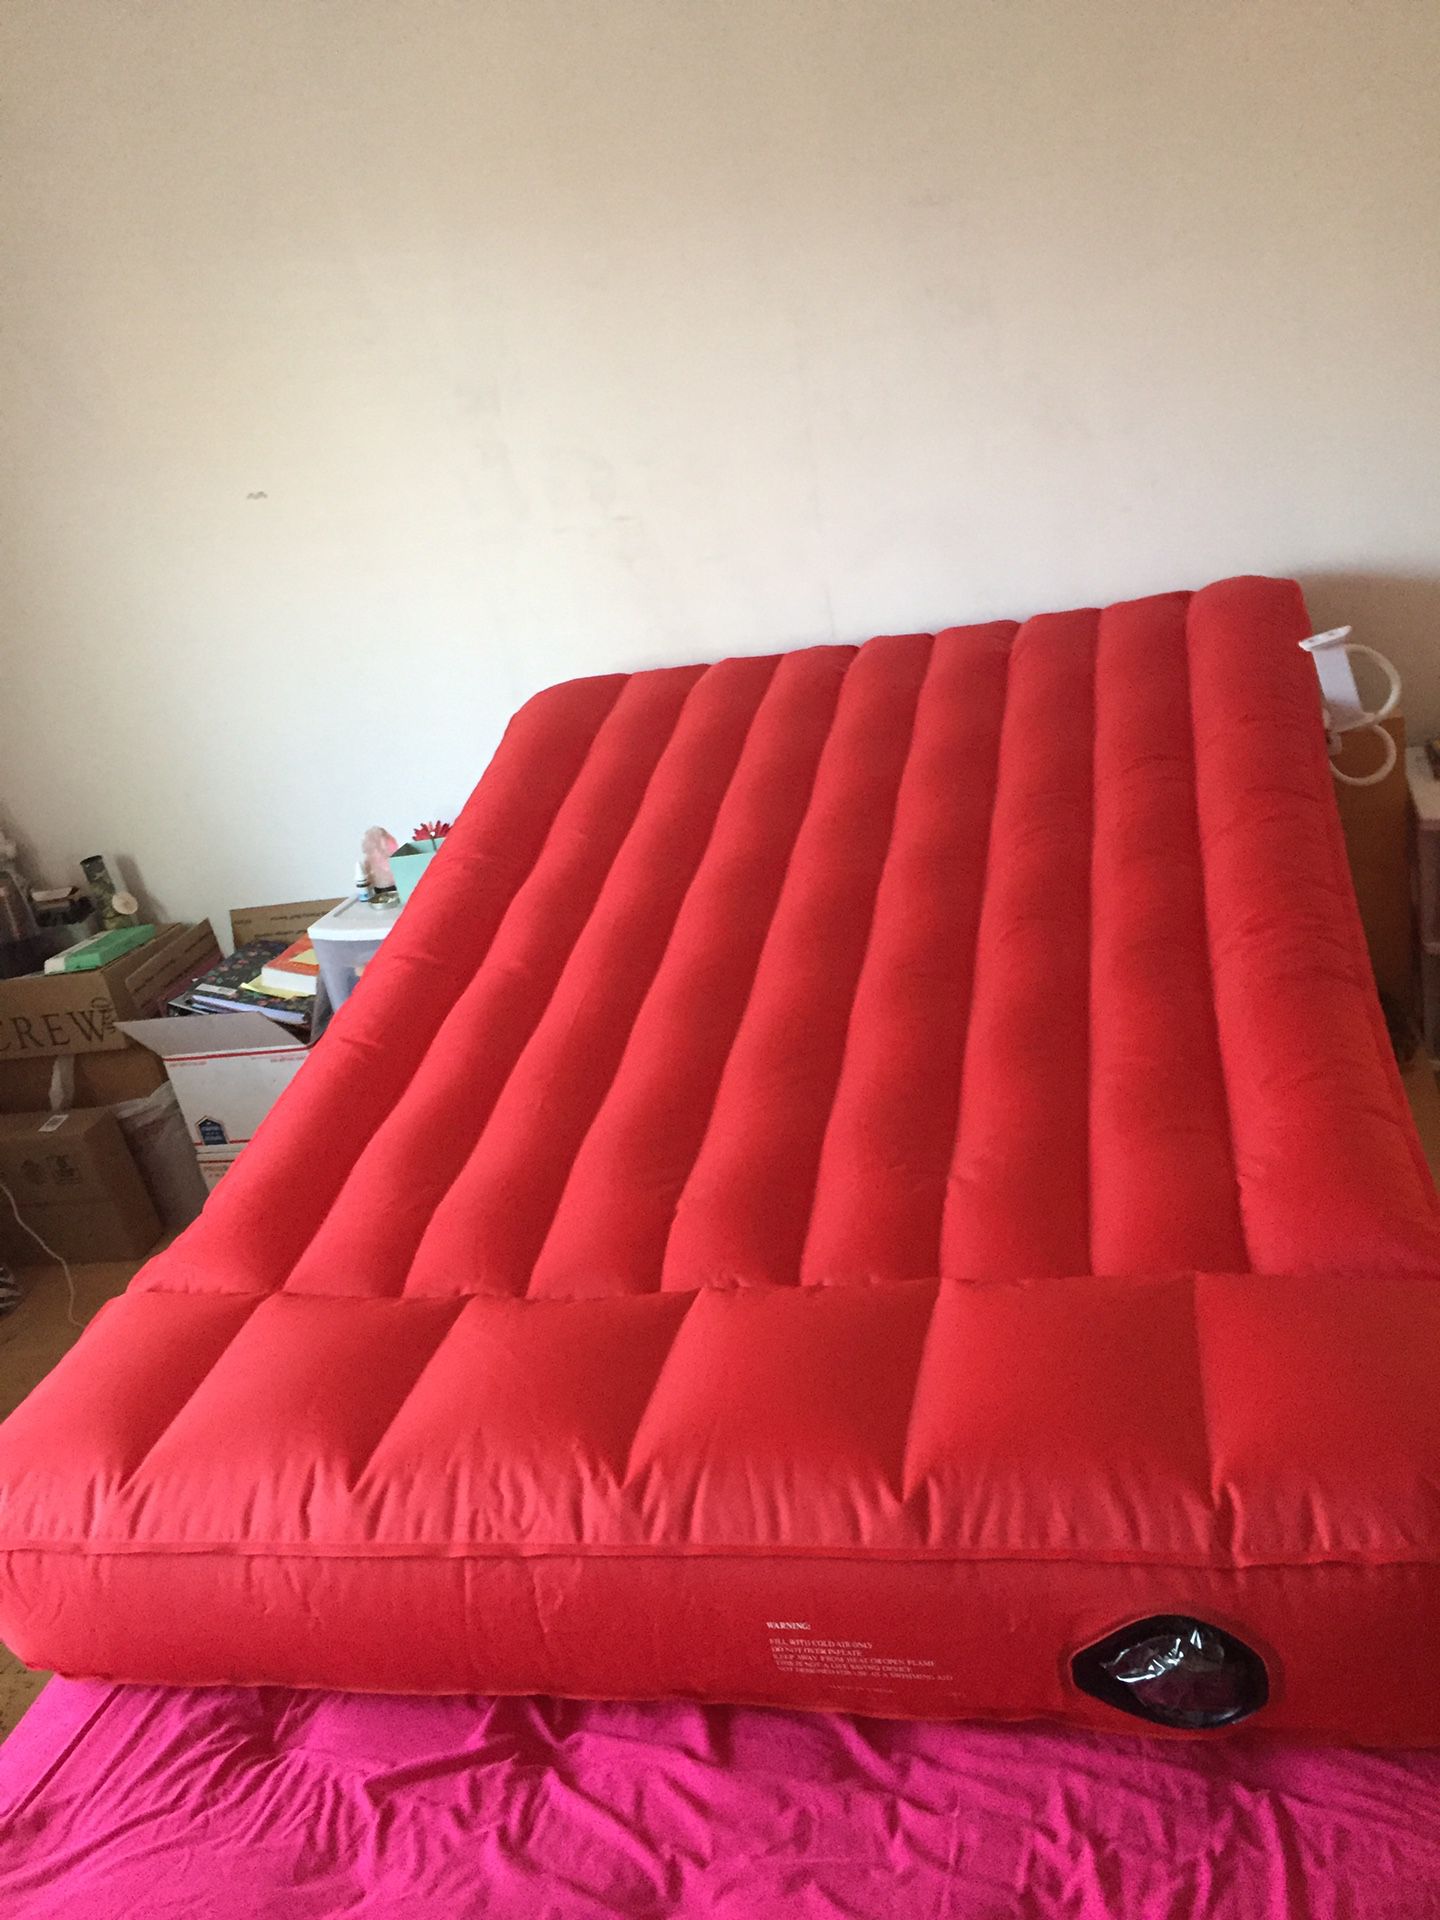 Aero Bed air mattress with built in pump